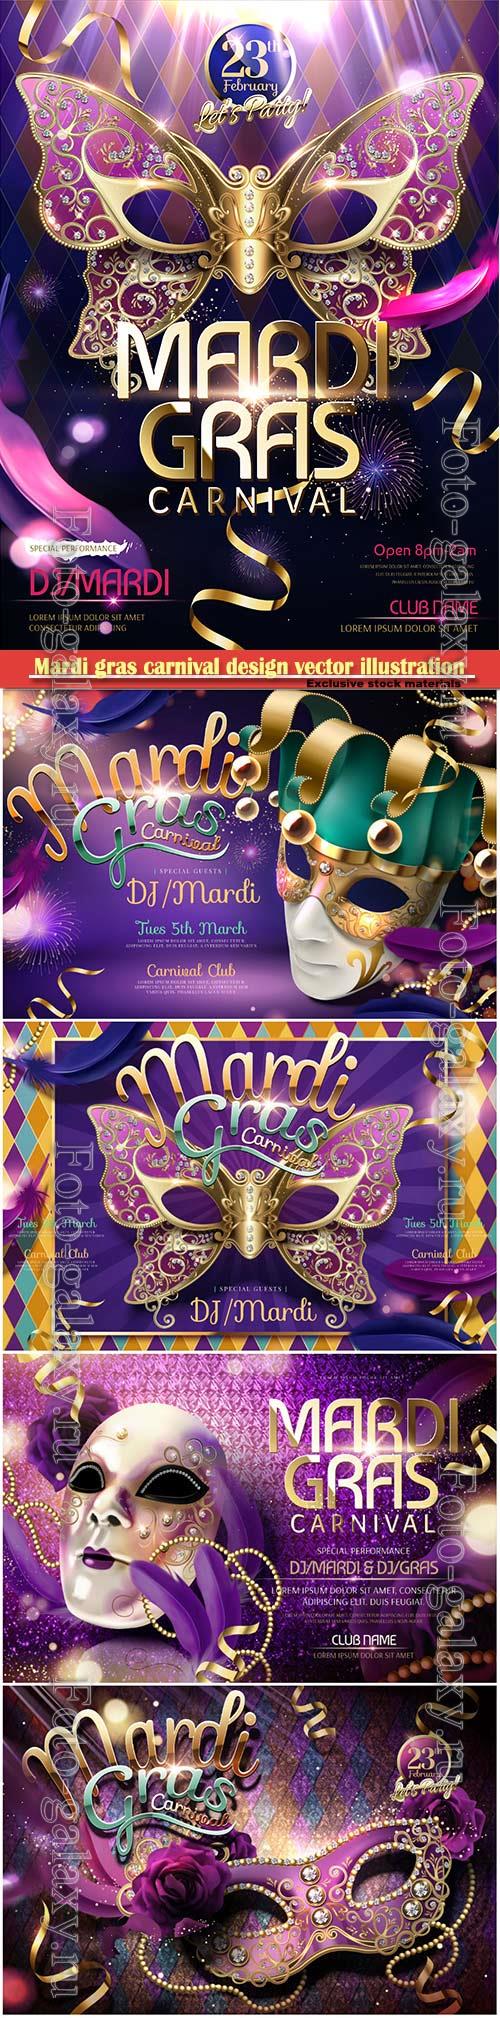 Mardi gras carnival design vector illustration